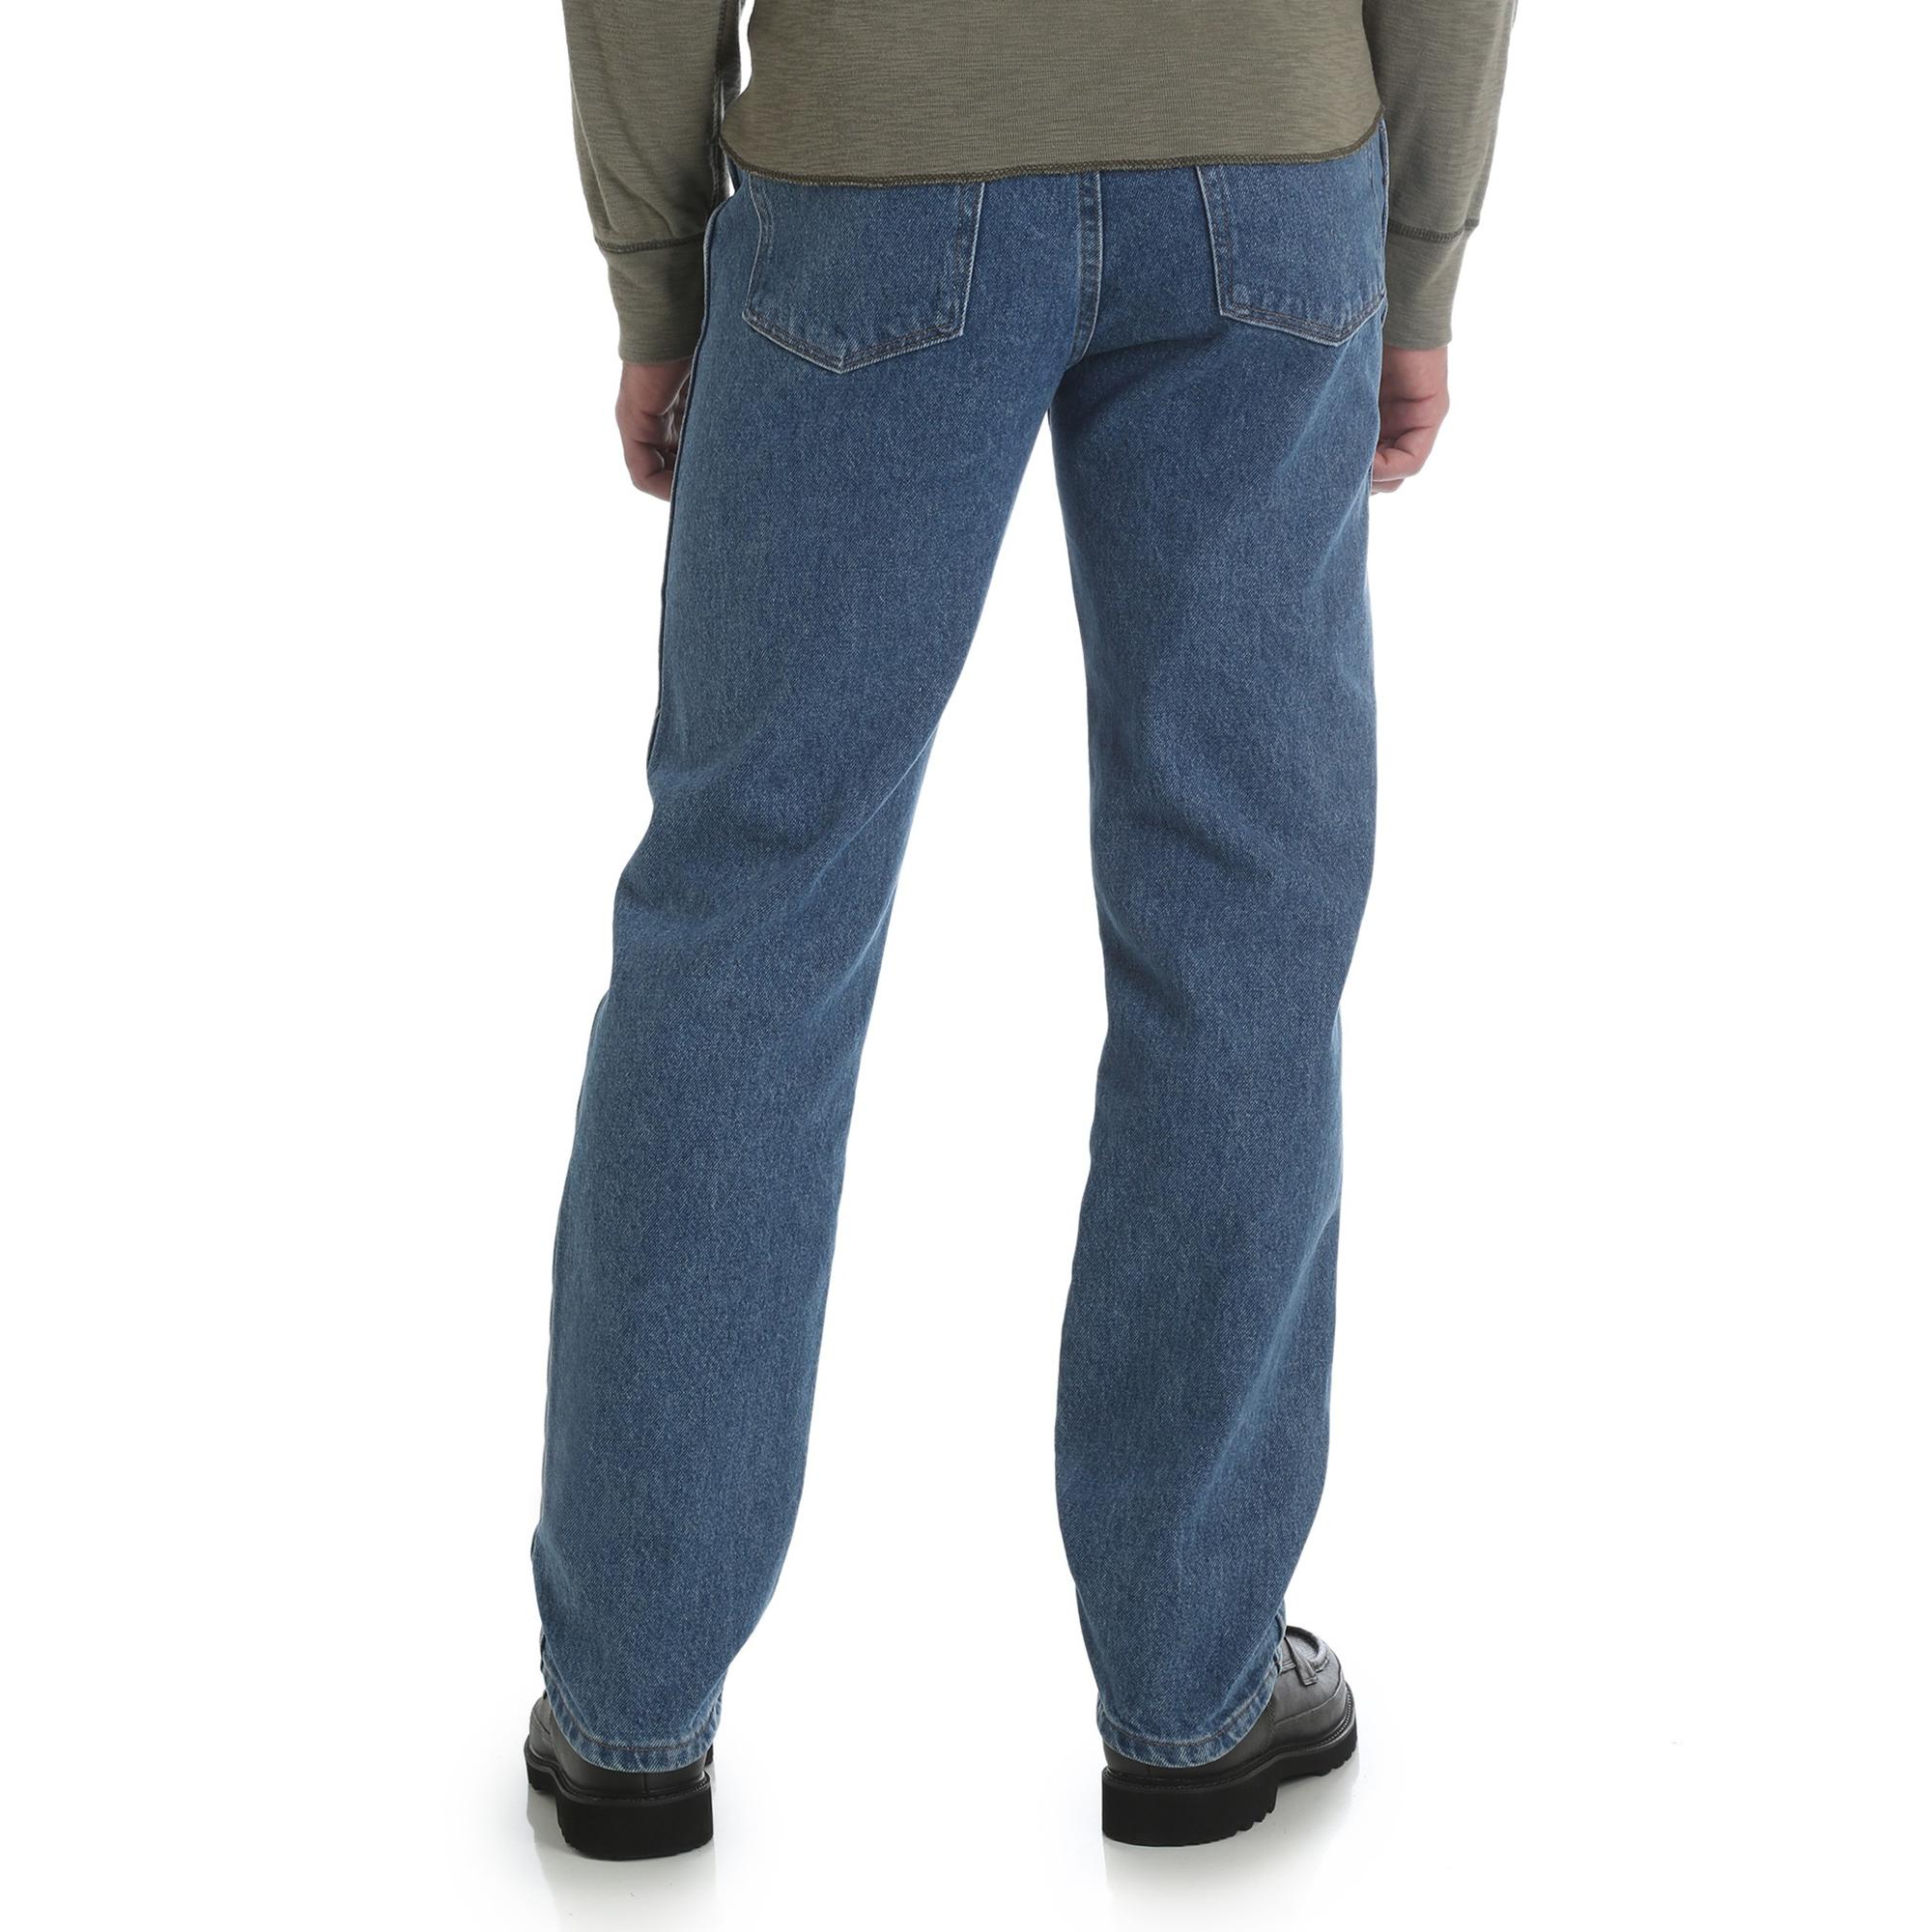 Wrangler Rustler Men's and Big Men's Regular Fit Jeans - image 7 of 7